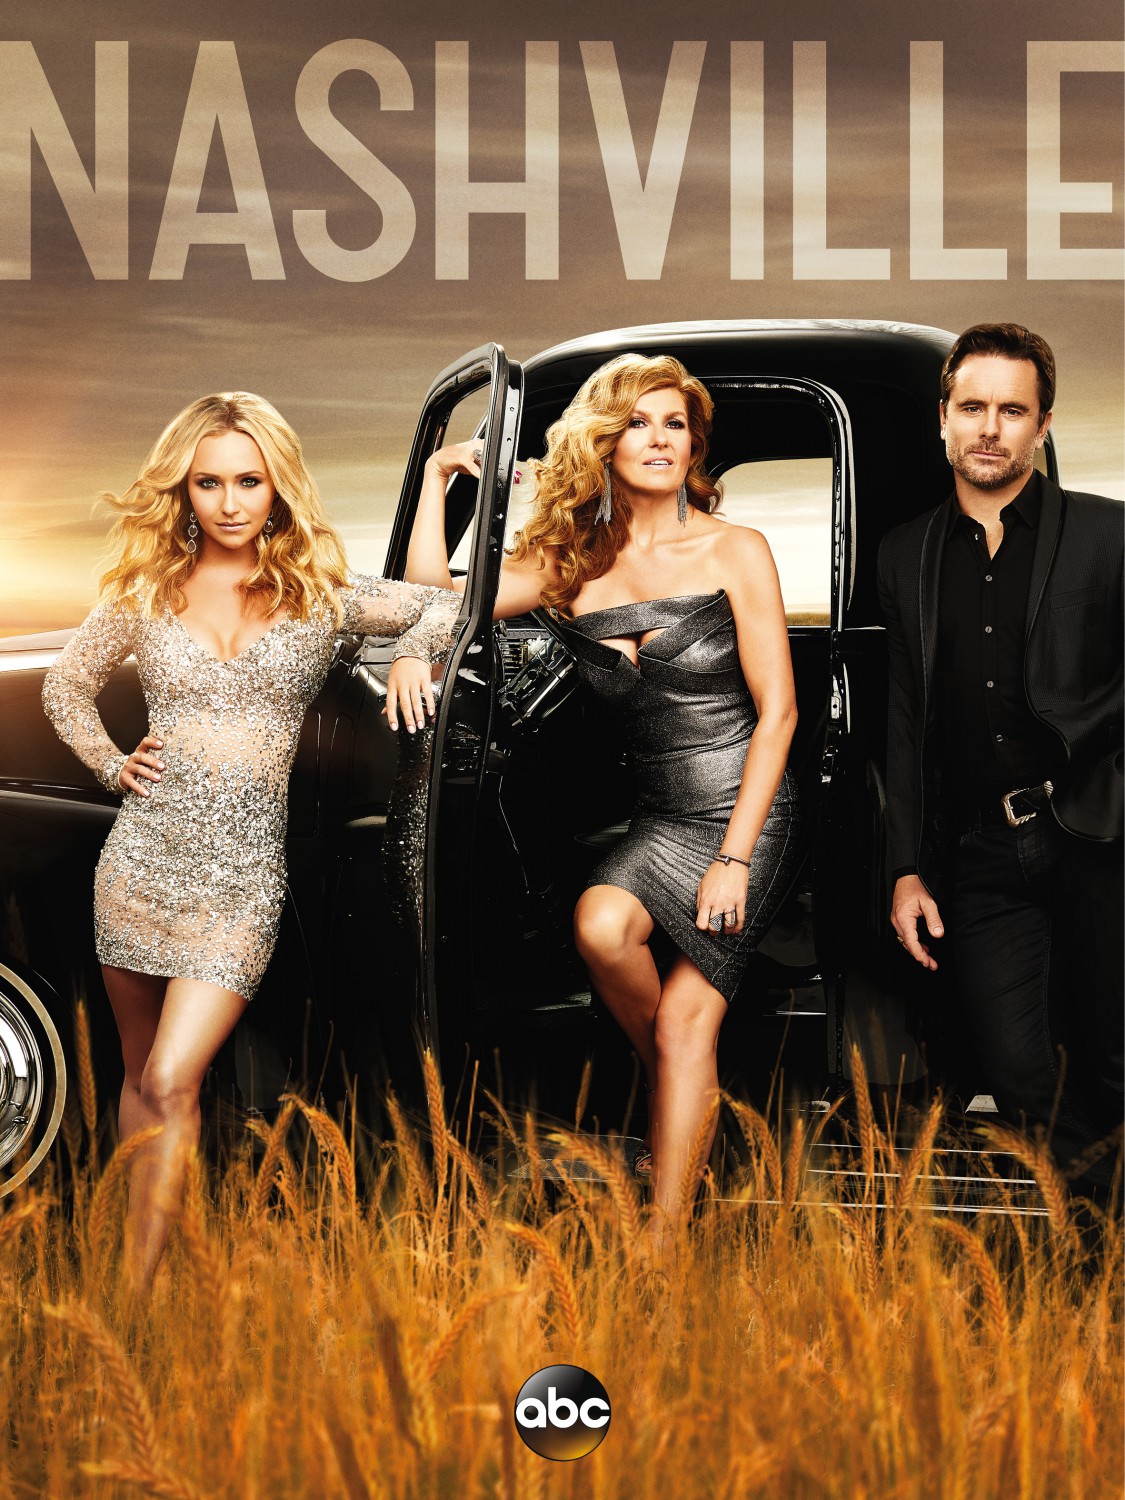 Extra Large TV Poster Image for Nashville (#4 of 5)